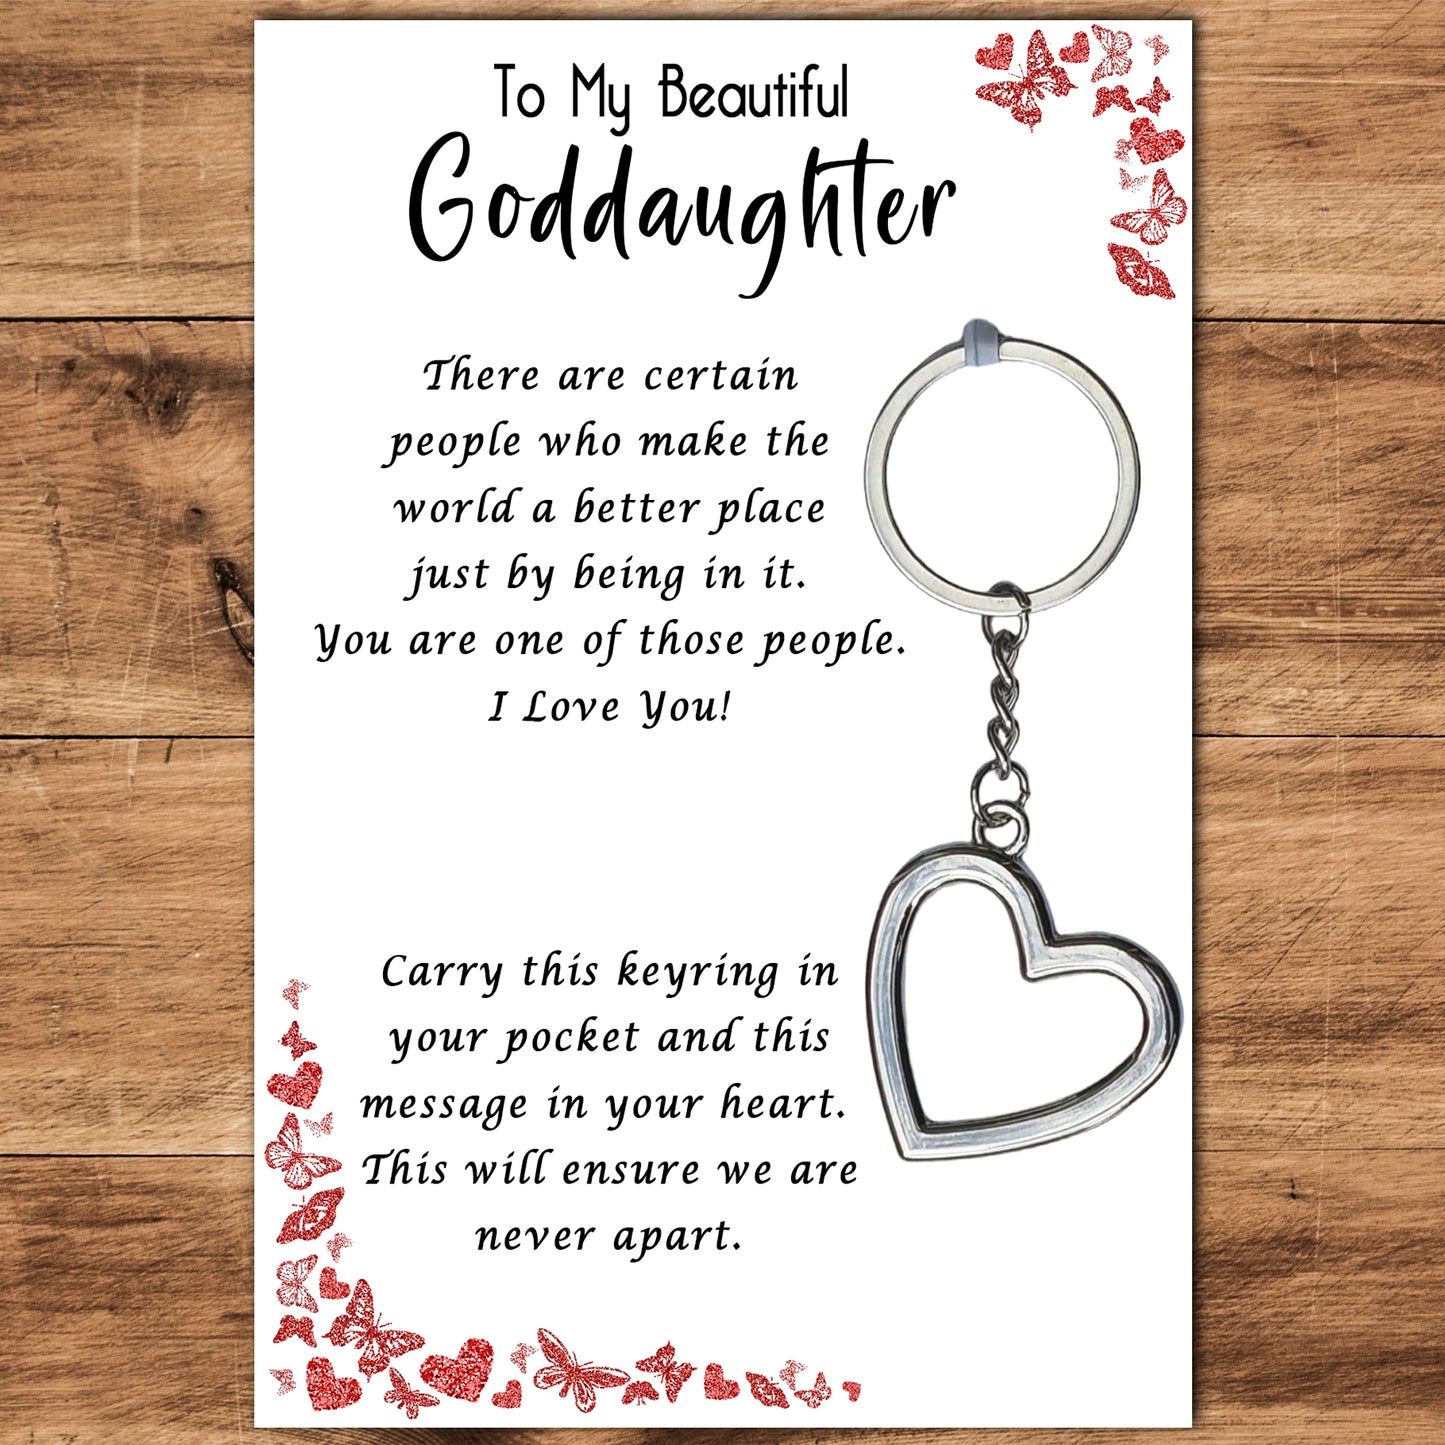 Goddaughter Heart Keyrings & Message Card